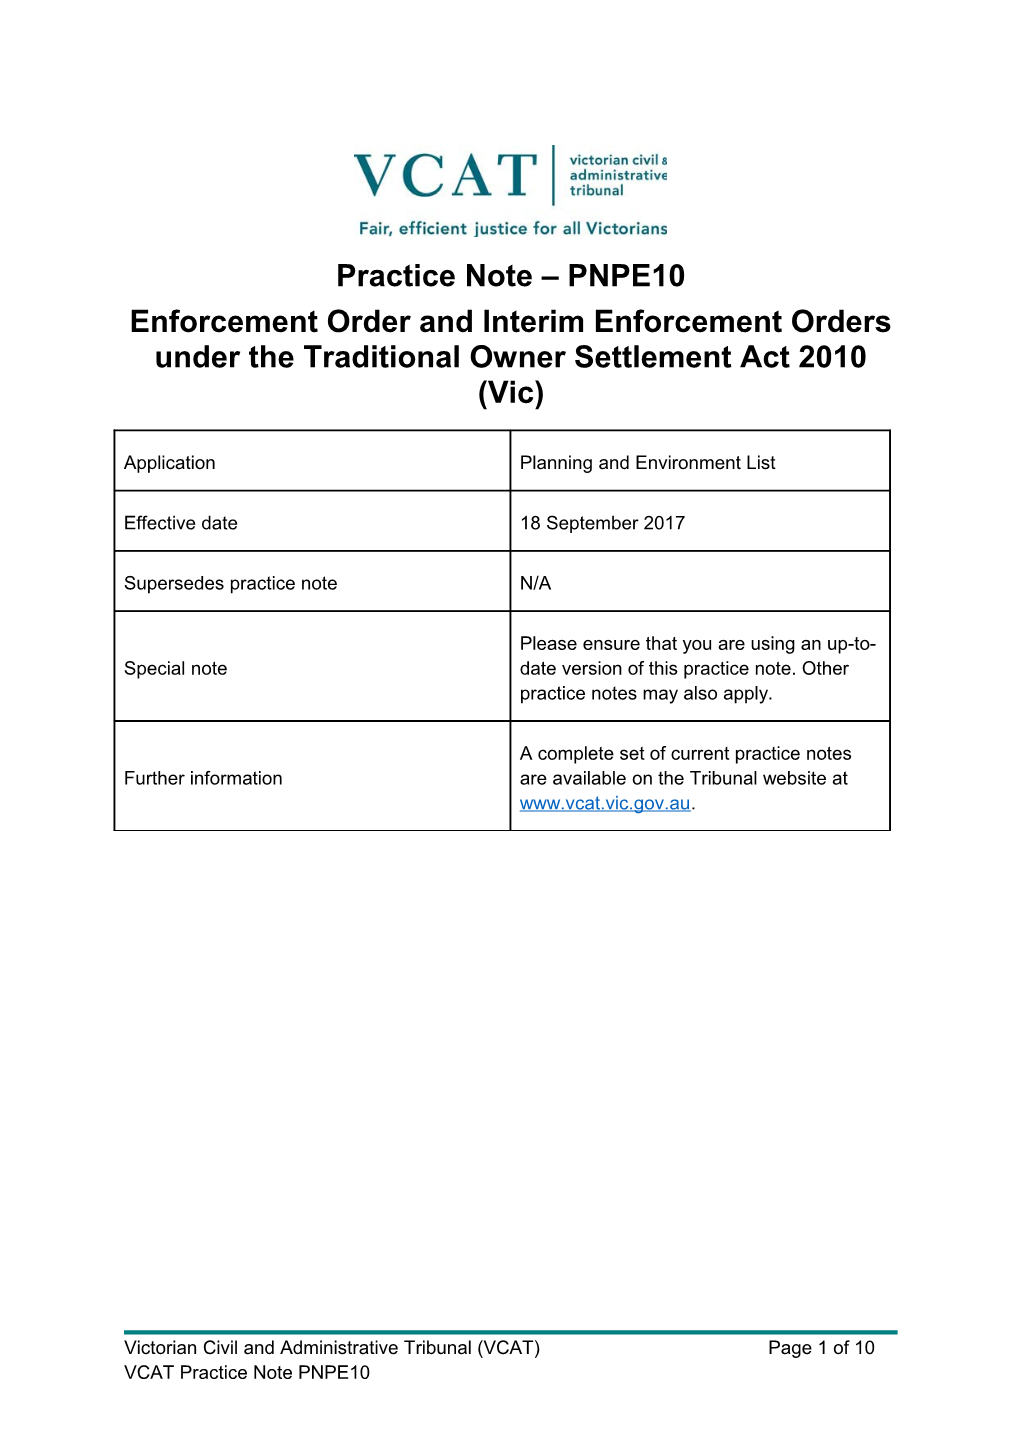 Practice Note PNPE10